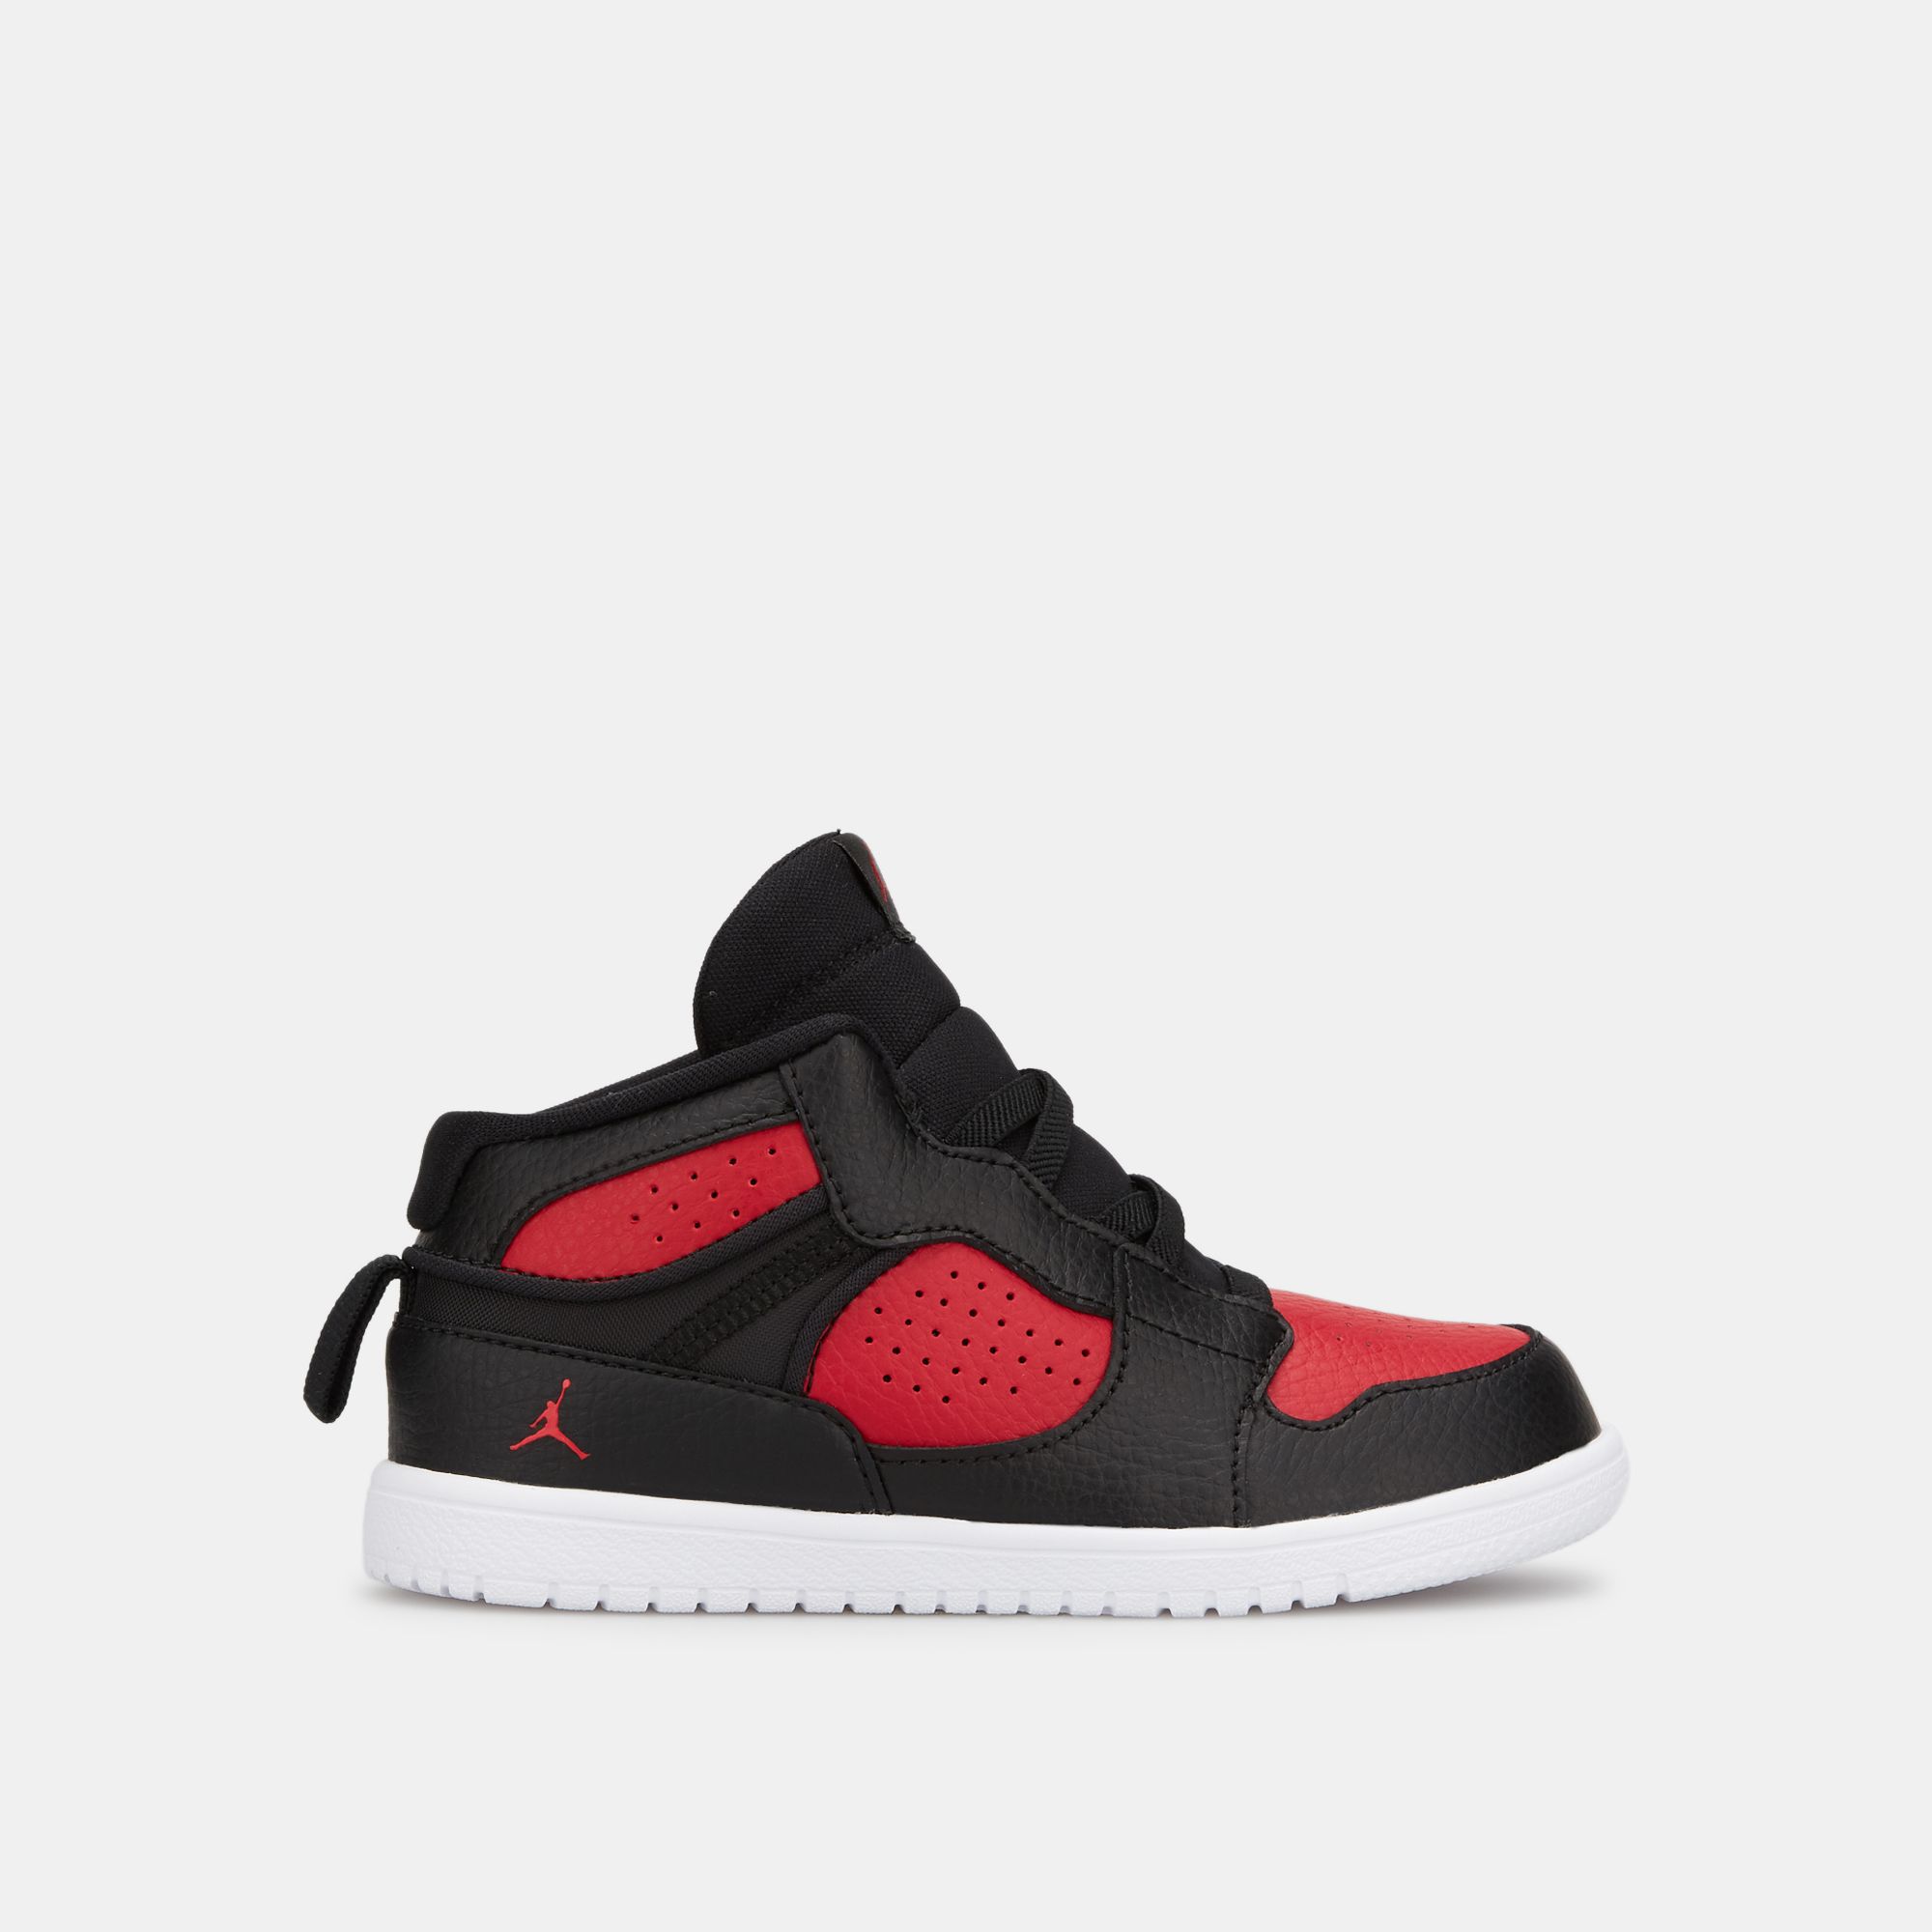 Buy Nike Kids' Jordan Access Shoe (Baby and Toddler) Online in Dubai ...